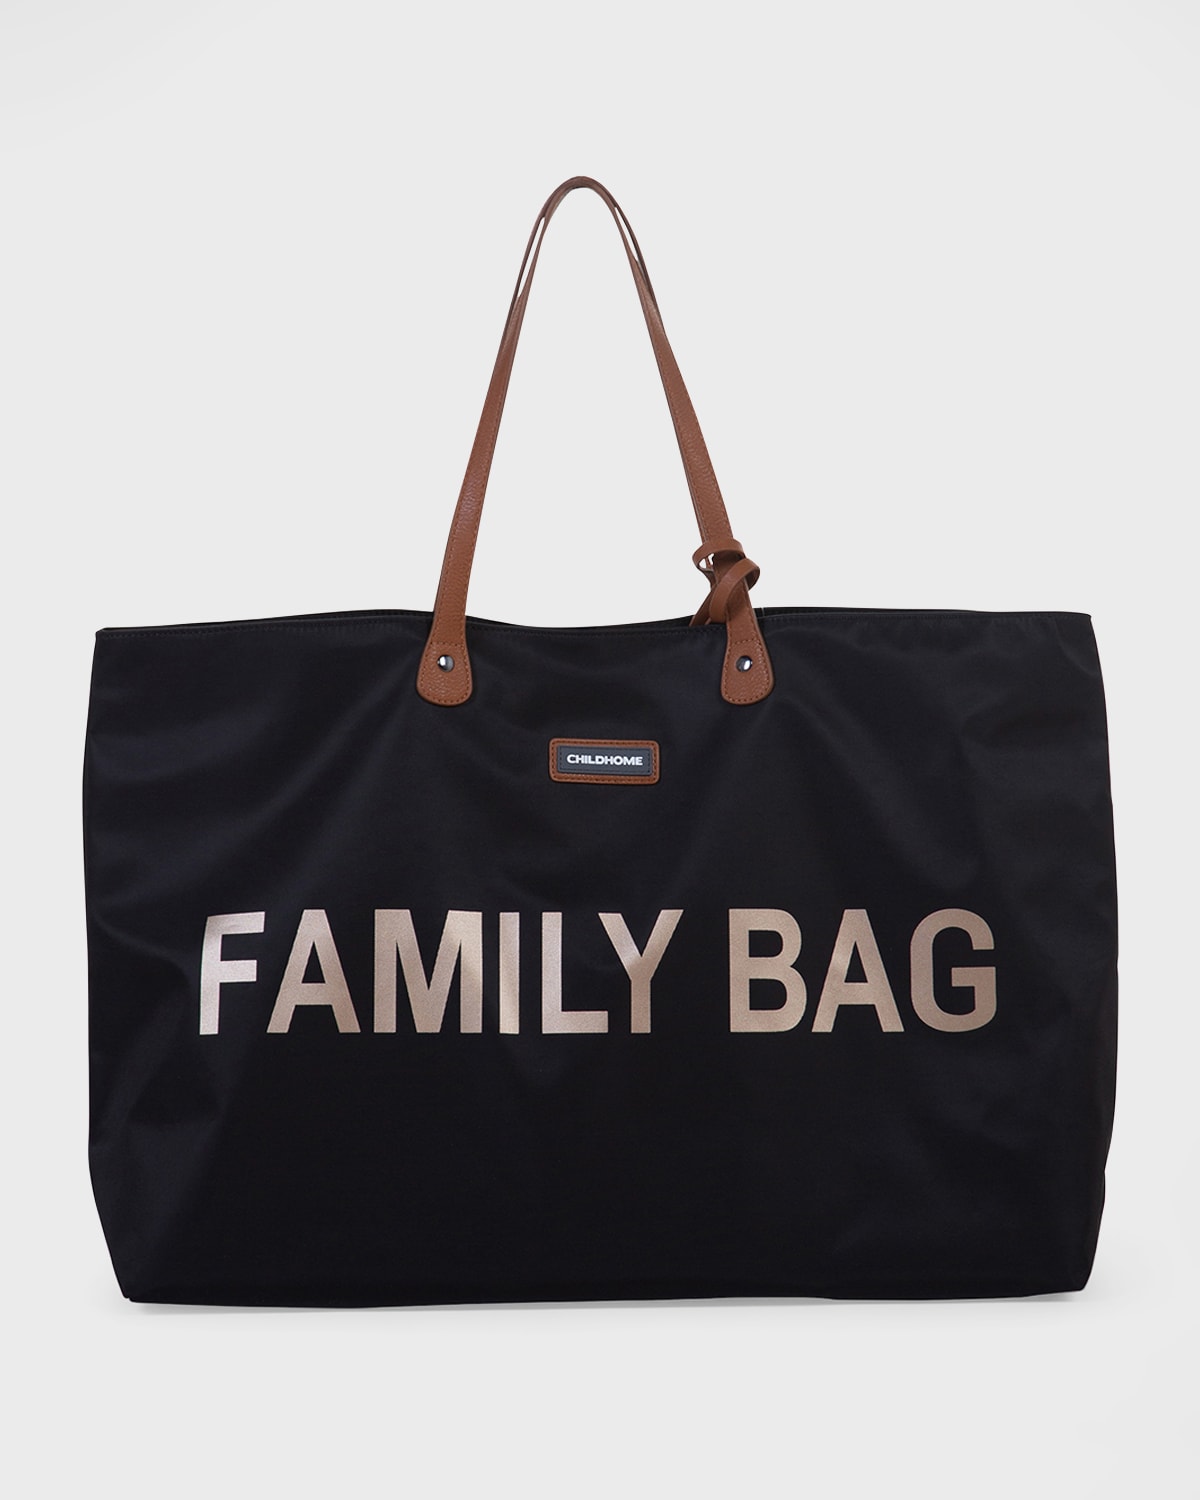 Childhome Family Bag In Black